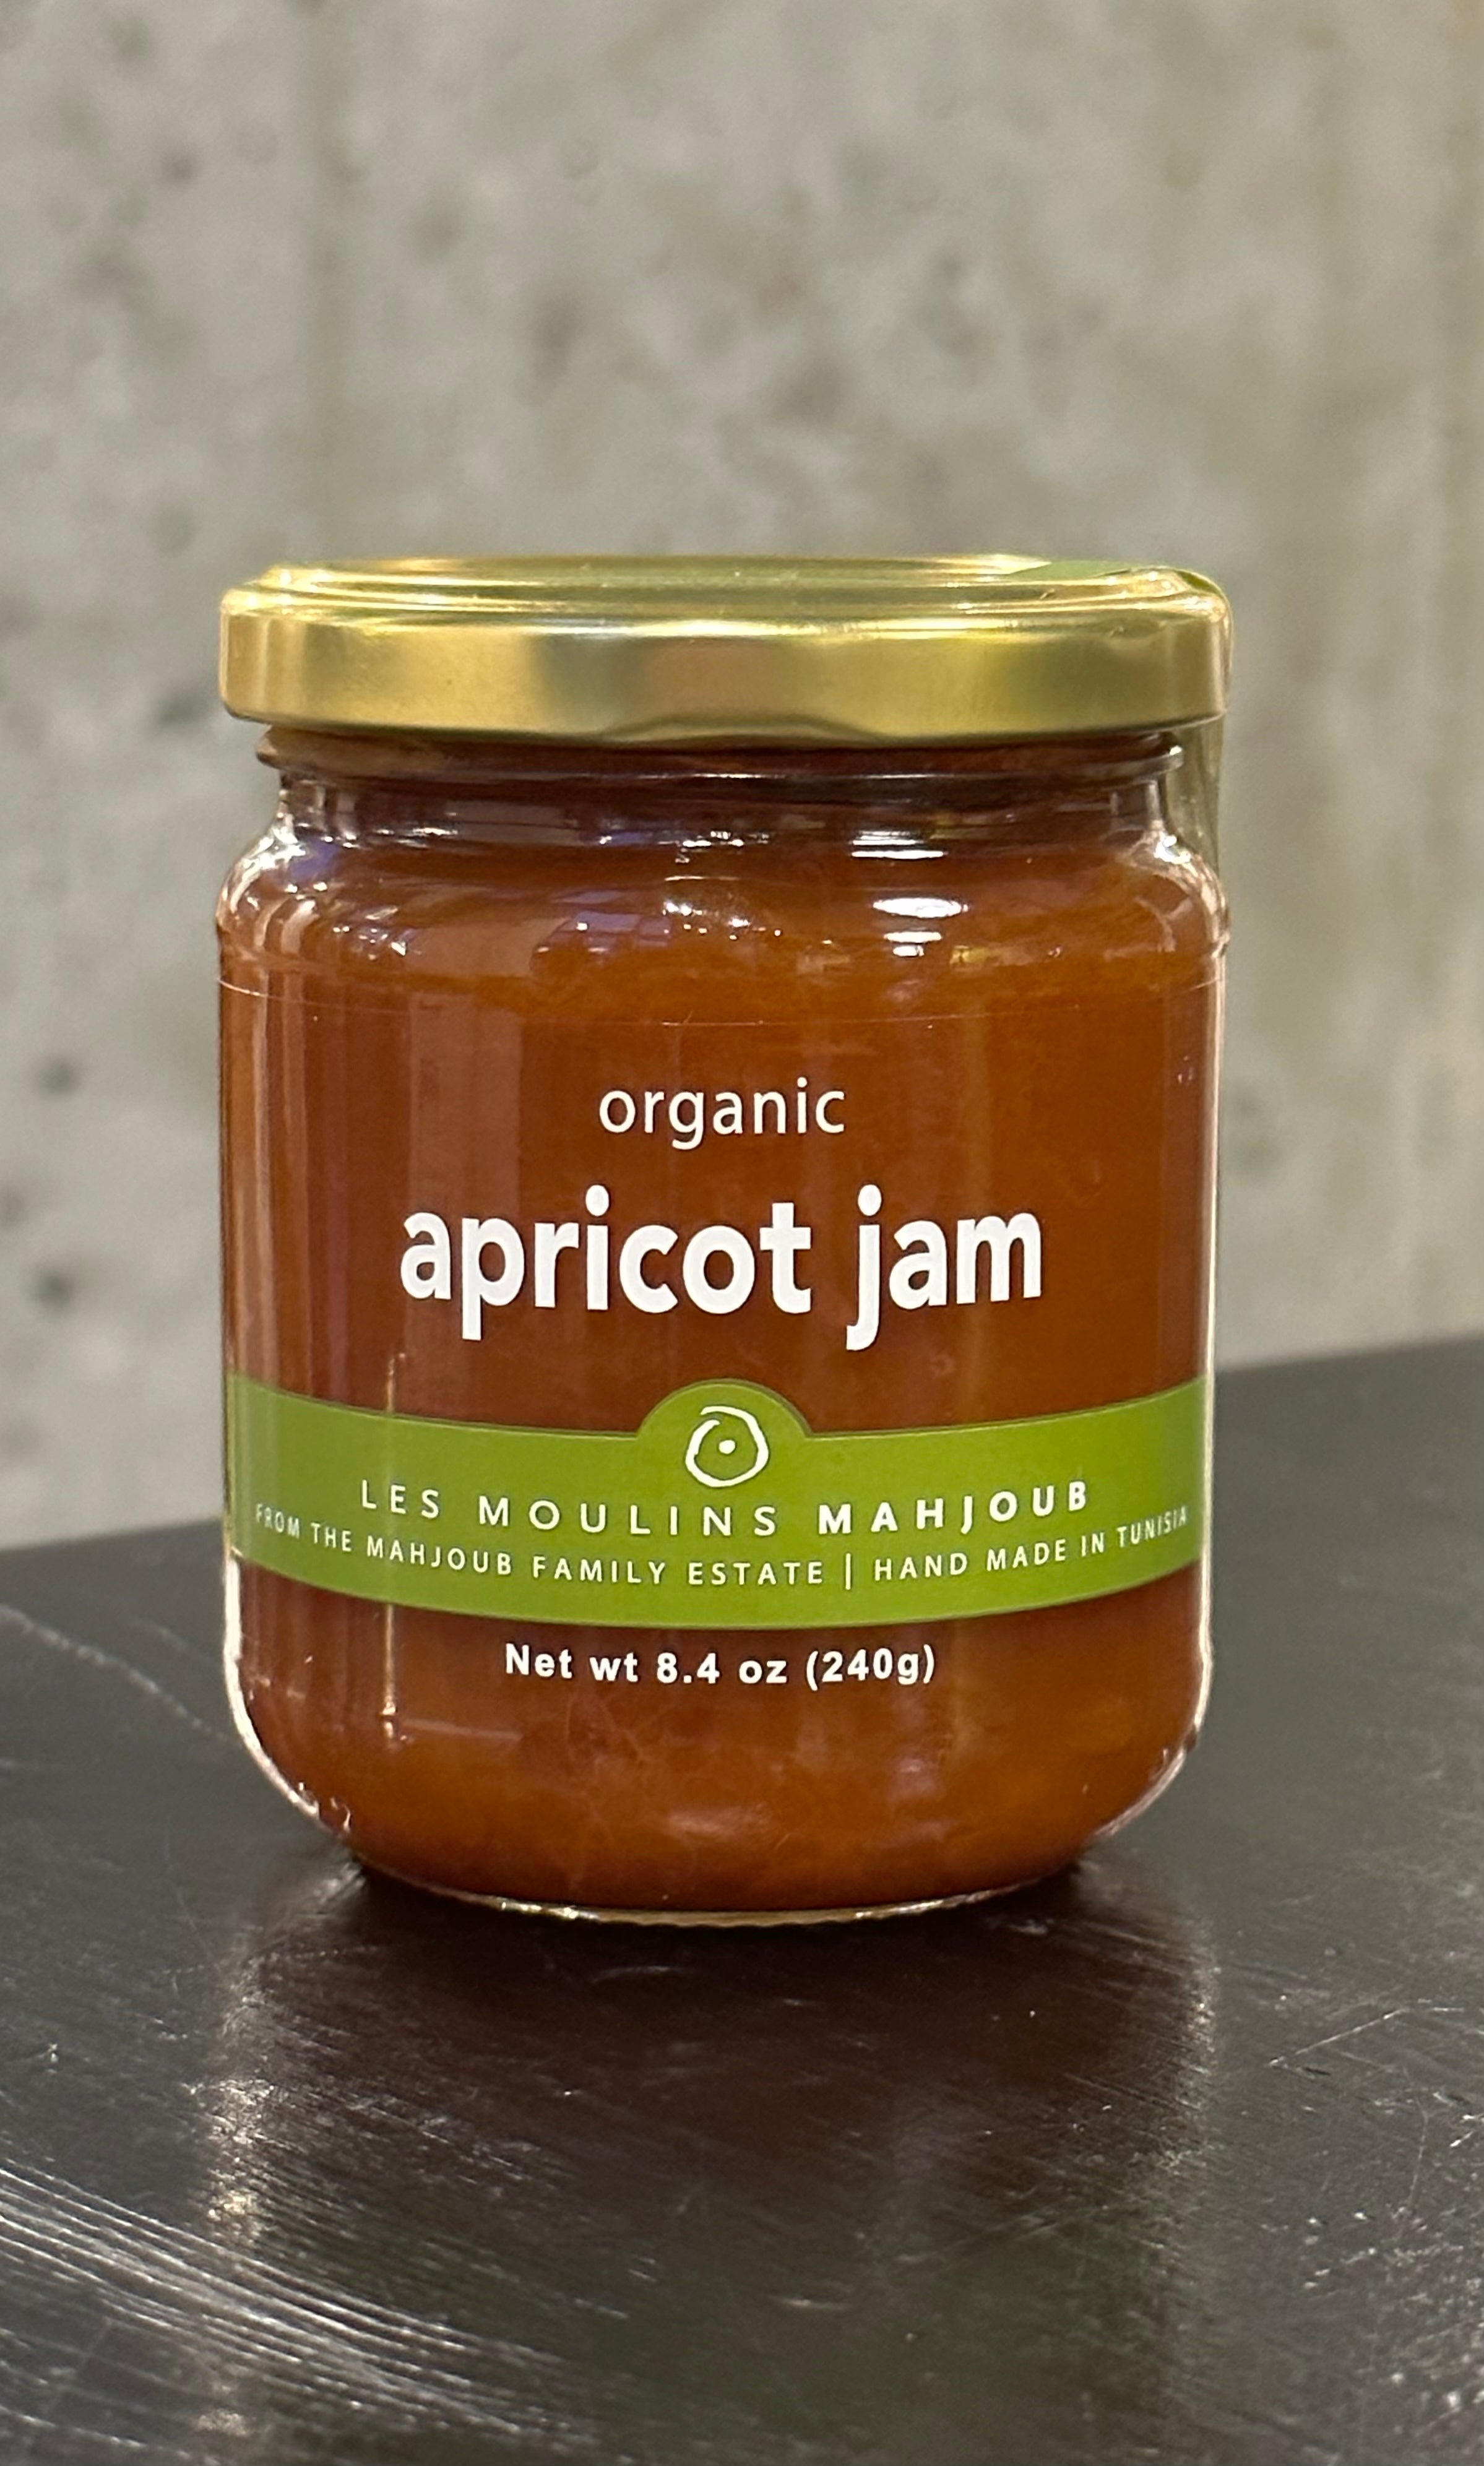 Les Moulins Mahjoub Organic Apricot Jam